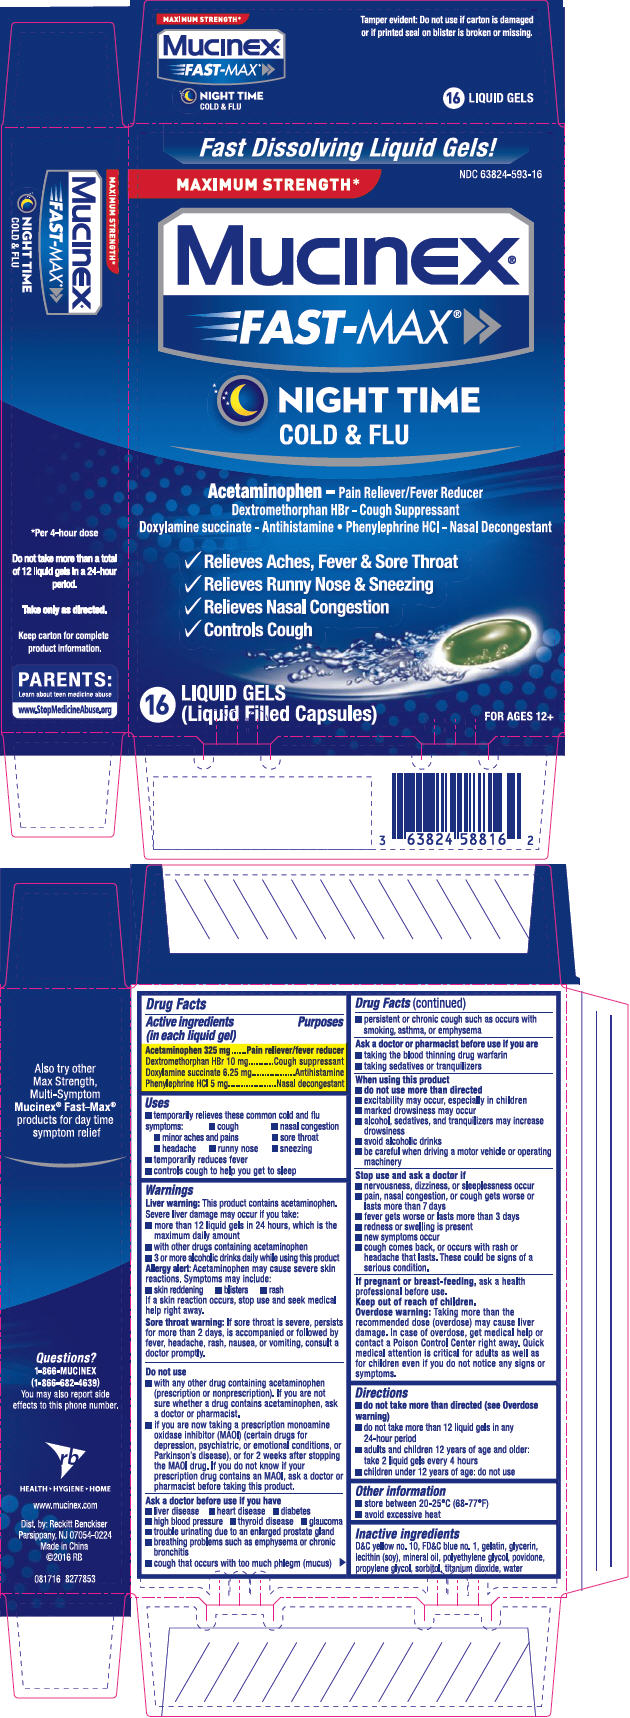 PRINCIPAL DISPLAY PANEL - 16 Liquid Gel Carton